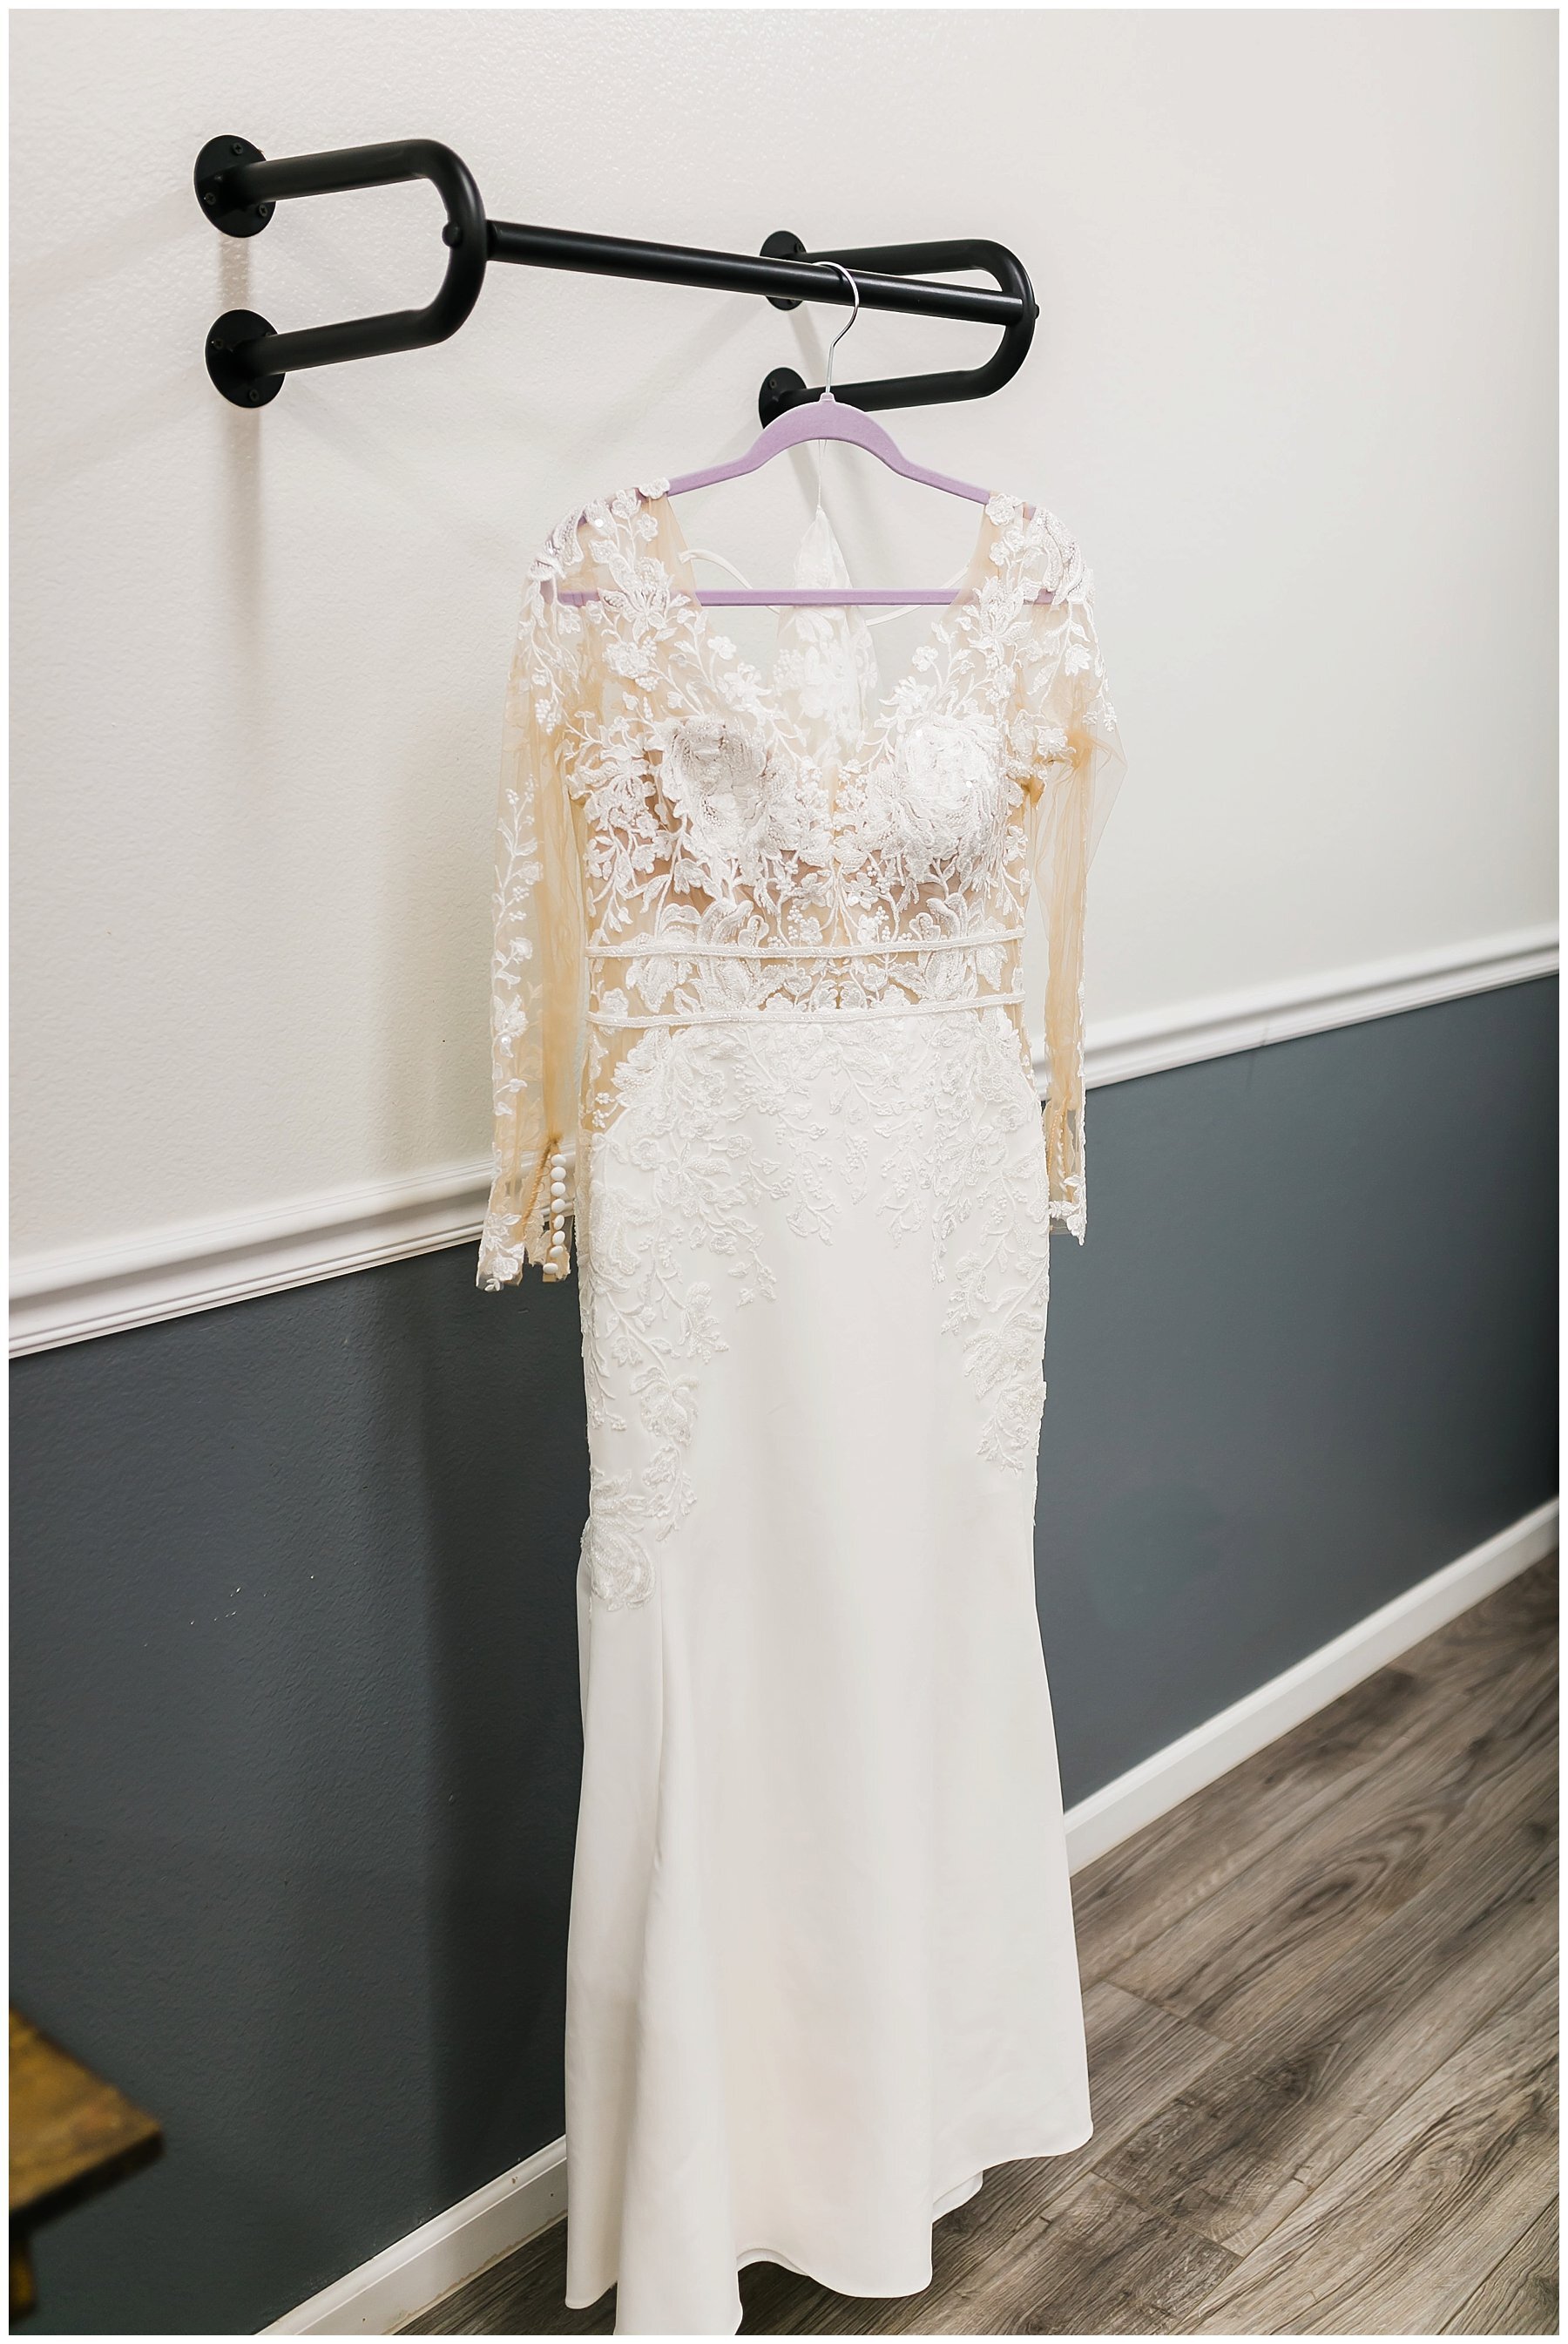  bride’s wedding dress hanging 